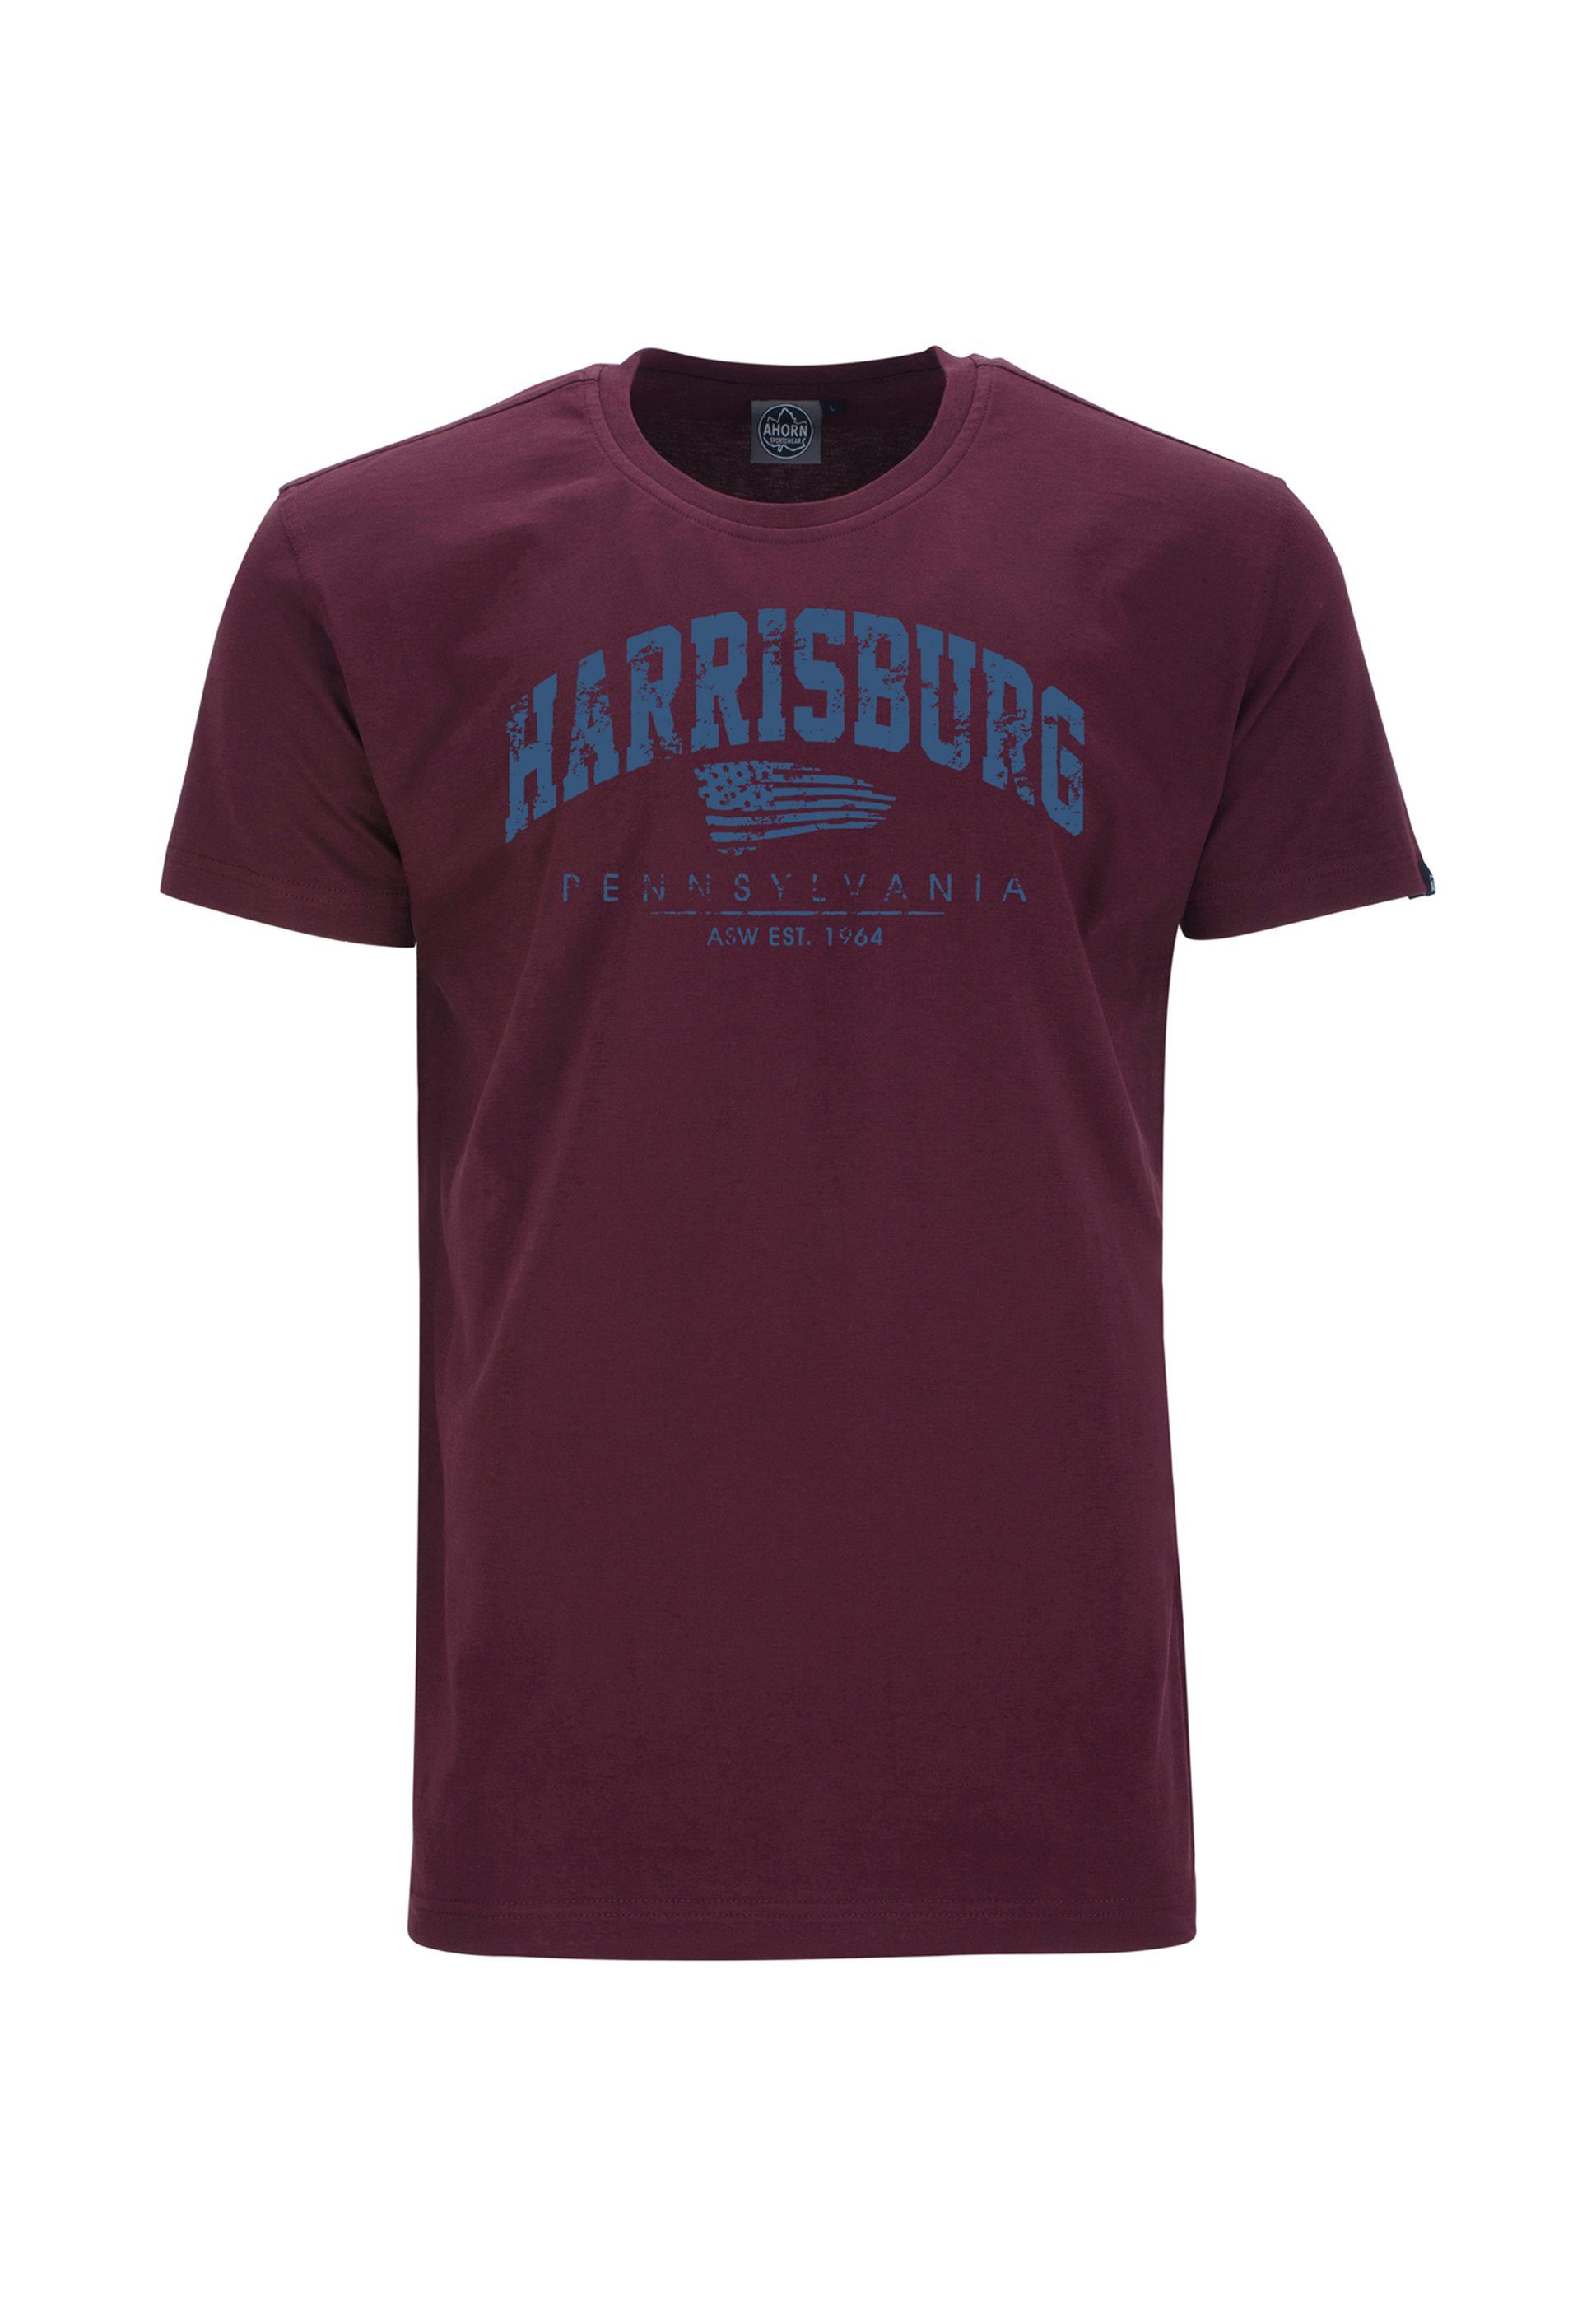 AHORN SPORTSWEAR modischem Frontprint mit HARRISBURG_ATLANTIC T-Shirt BLUE bordeaux